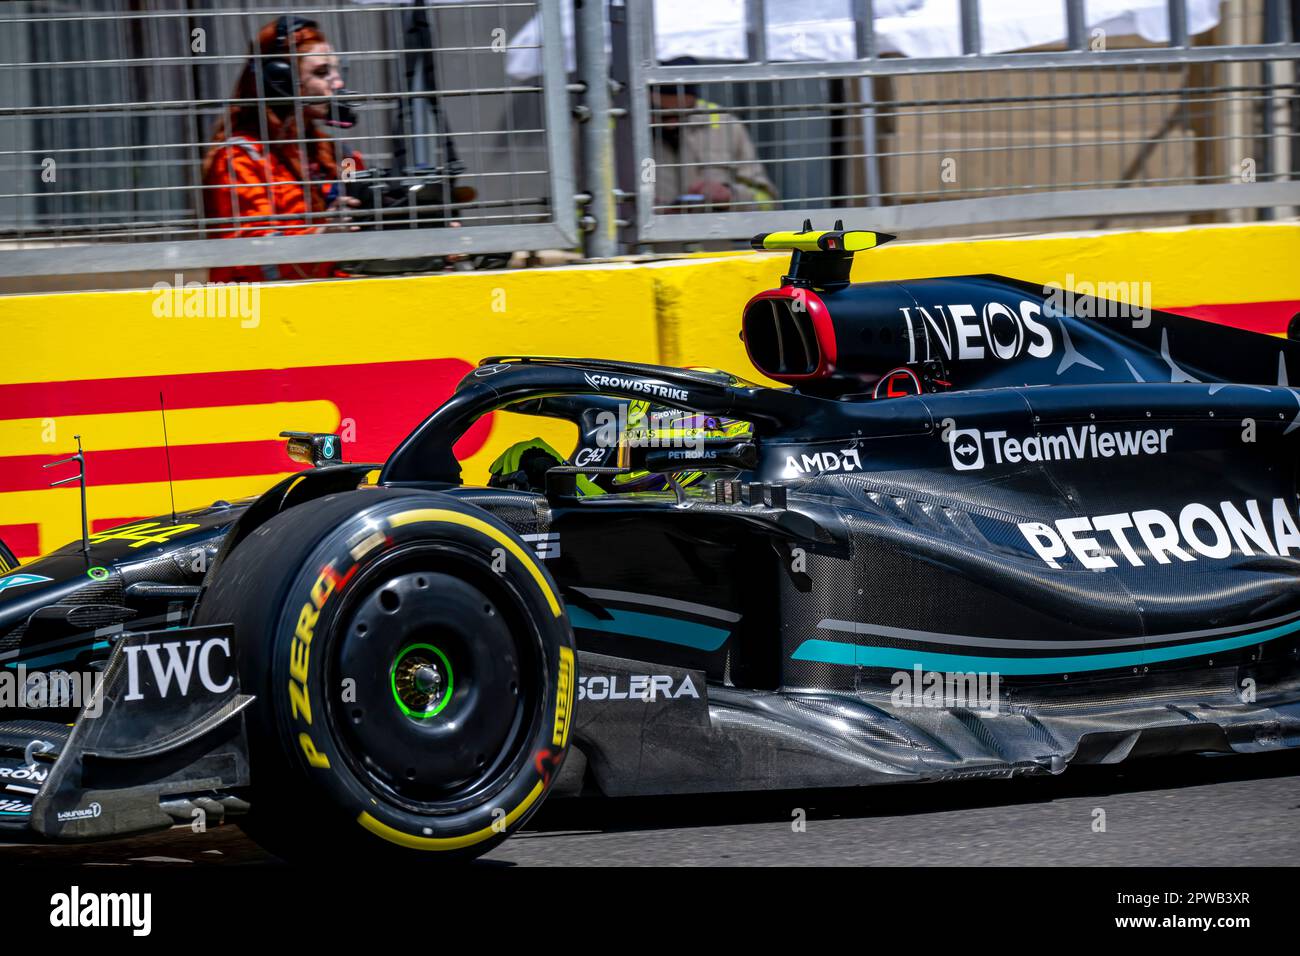 Baku, Azerbaijan, April 29, Lewis Hamilton, from the United Kingdom competes for Mercedes F1